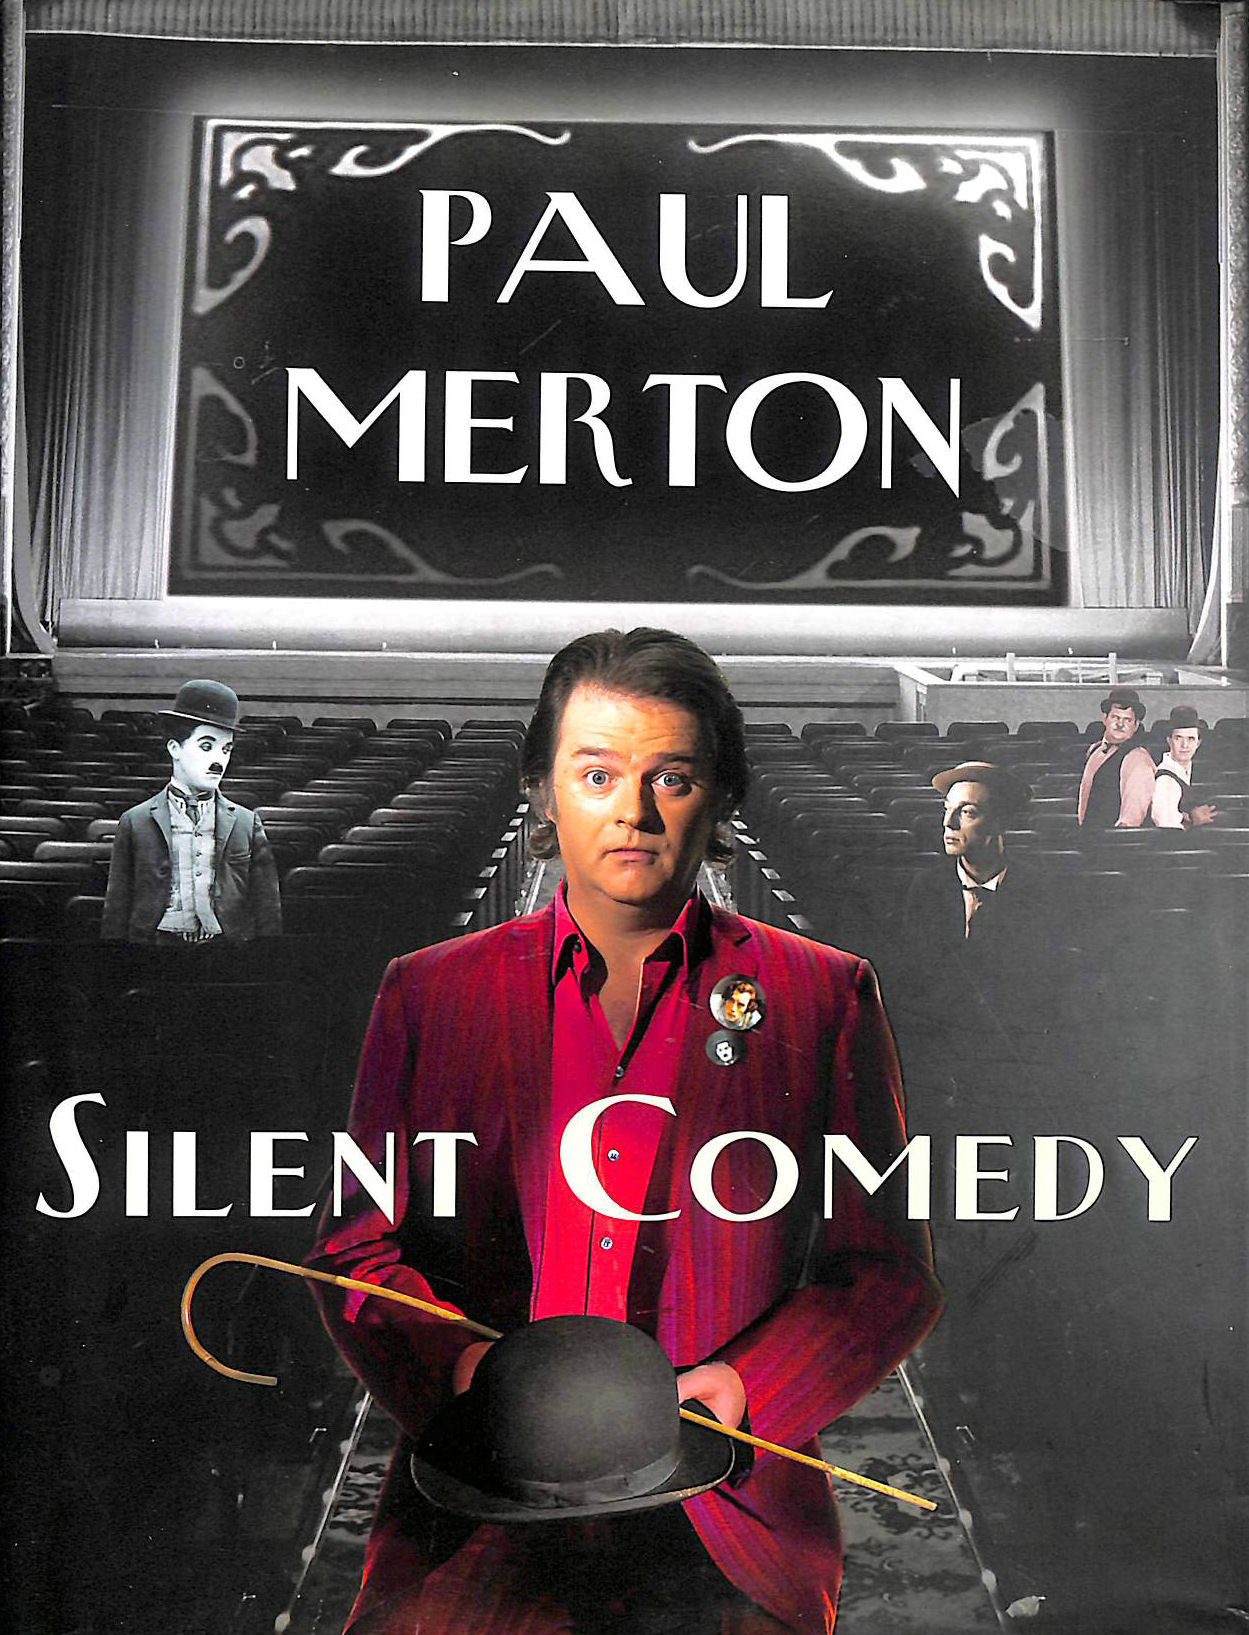 MERTON, PAUL - Silent Comedy